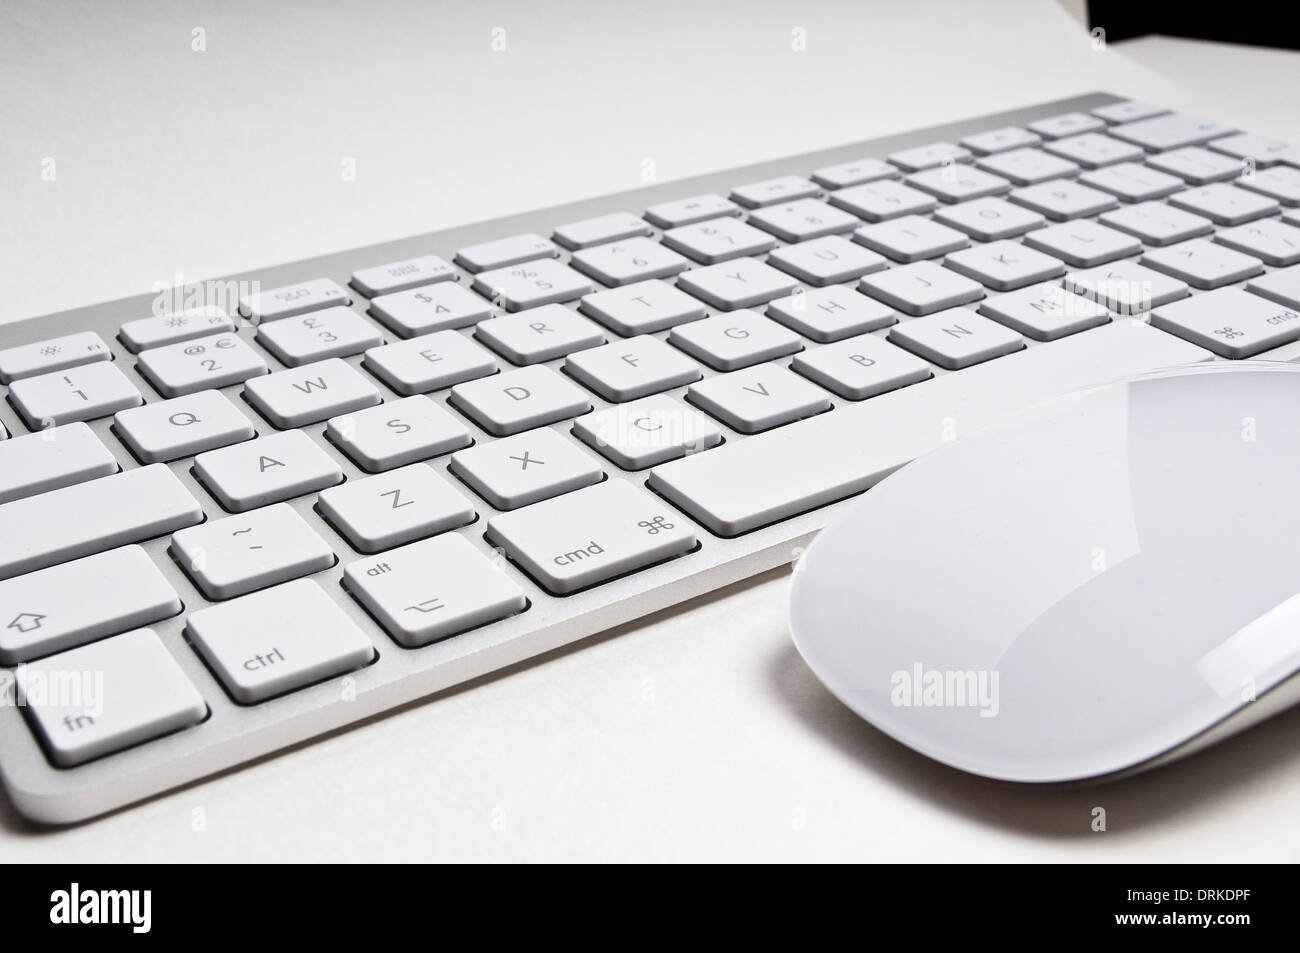 Wireless Apple Mac keyboard and mouse Stock Photo